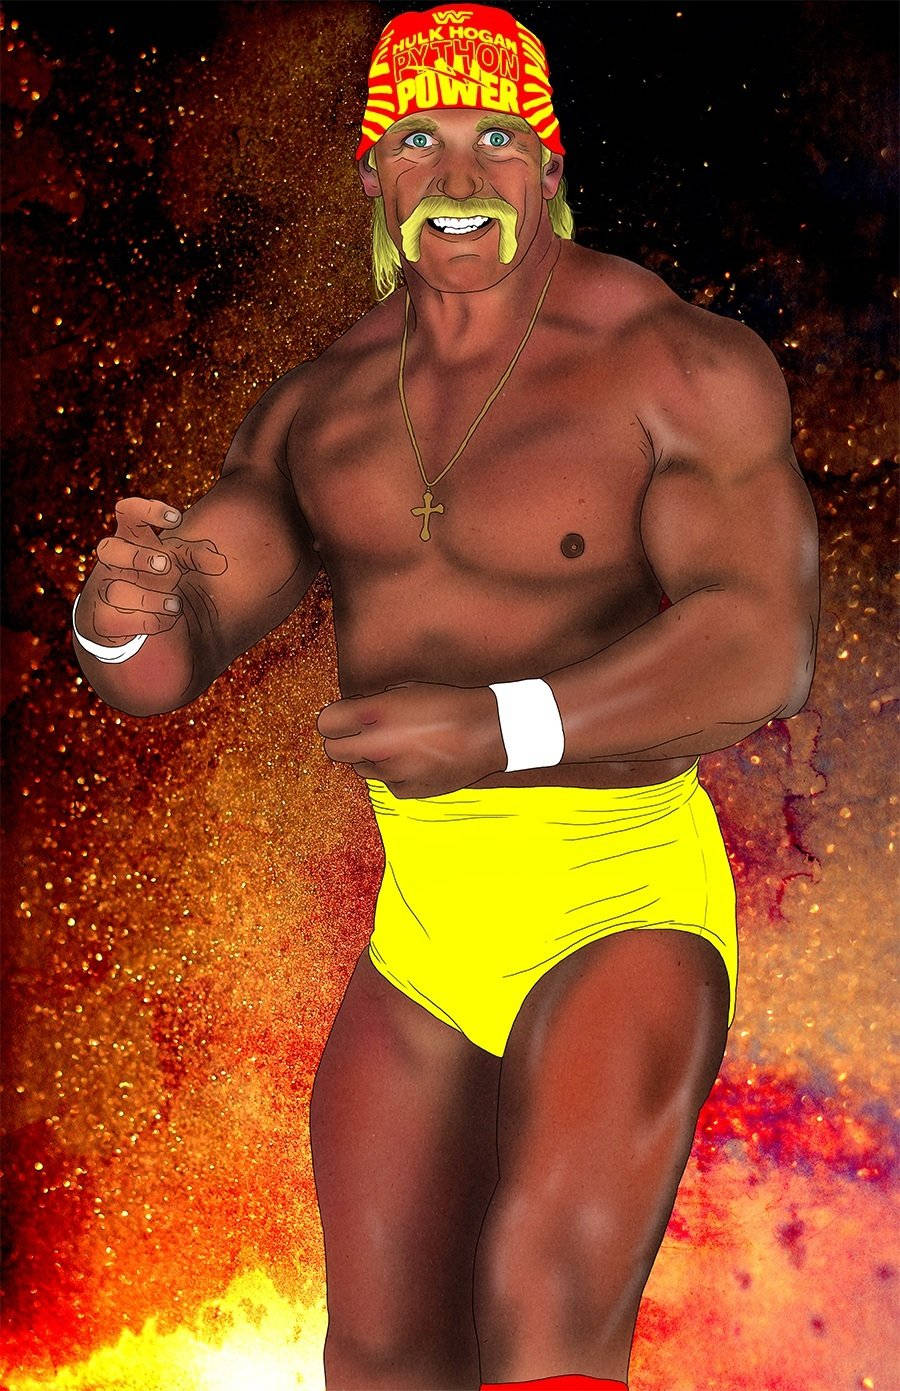 Hulk Hogan Digital Painting Wallpaper